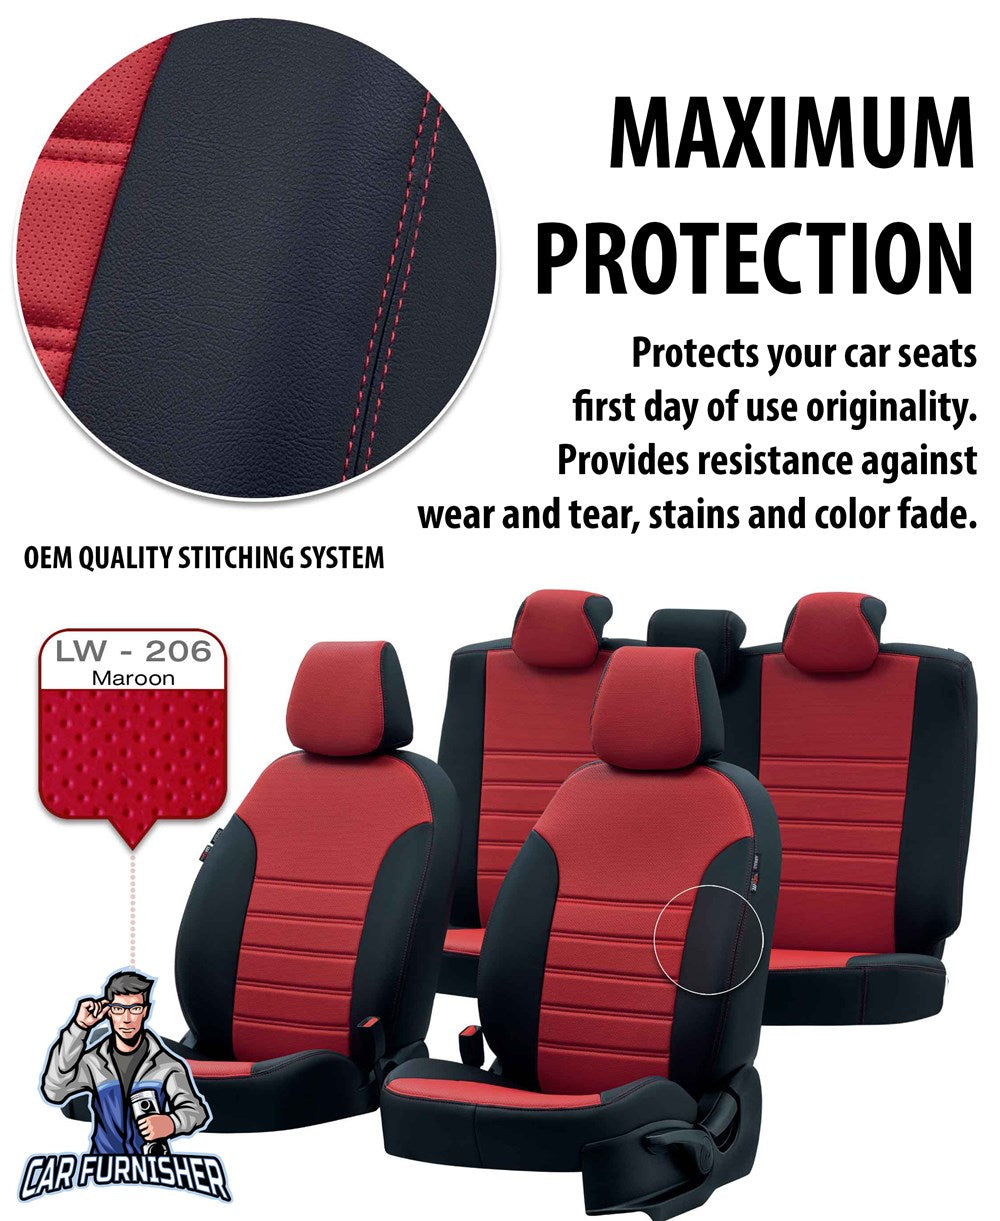 Dodge Nitro Seat Cover Istanbul Leather Design Ivory Leather